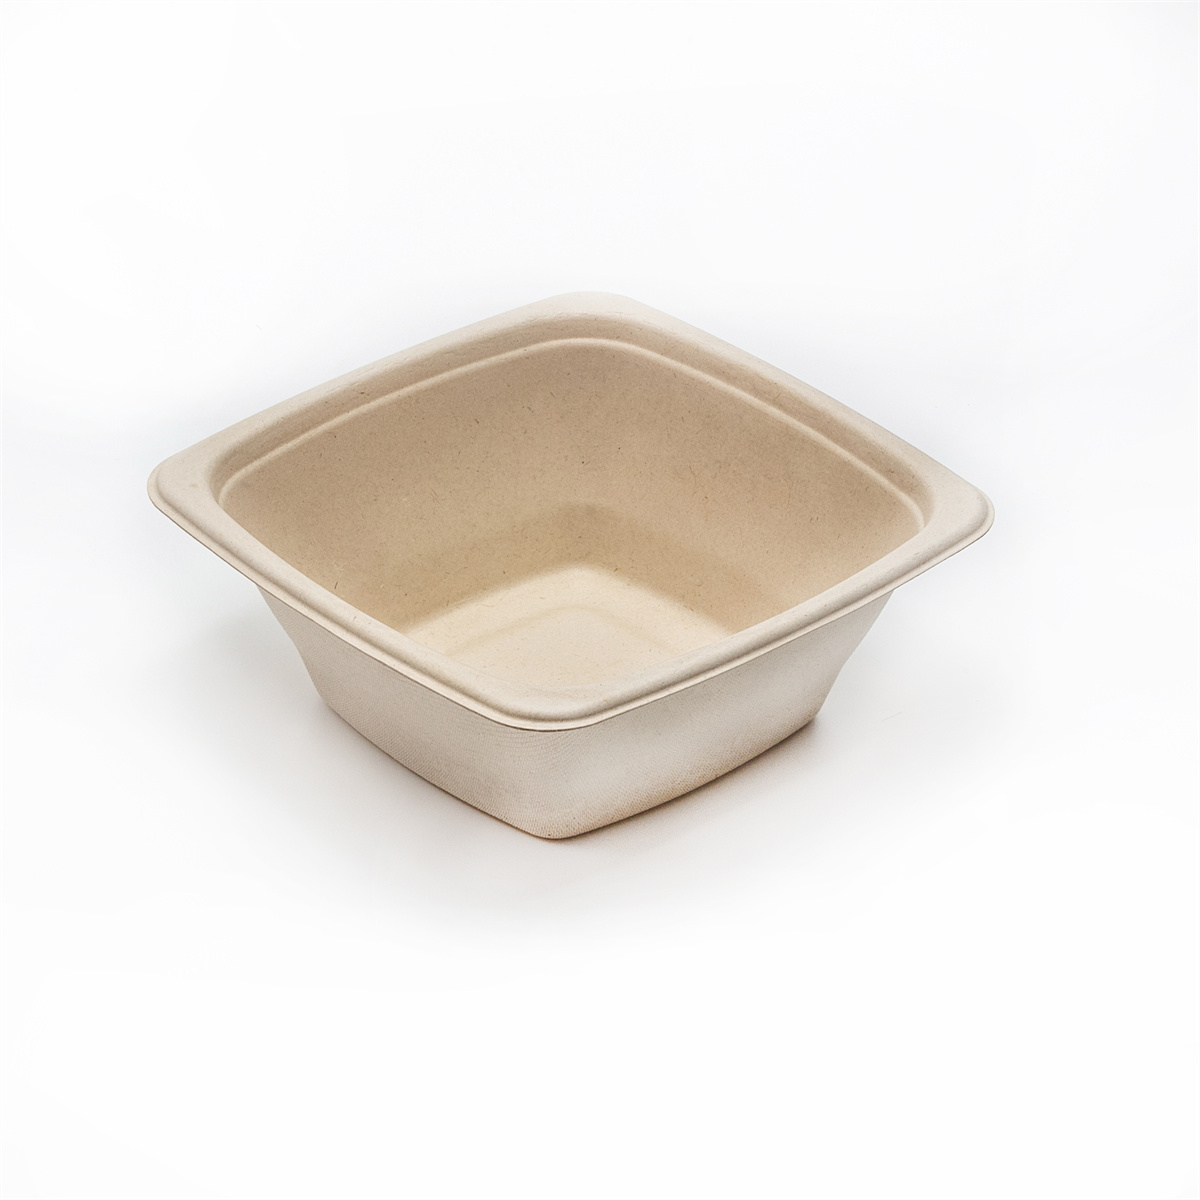 PB032 Customizable Eco-friendly PFAS Free Disposable Tableware 32oz Square Bowl Disposable Compostable Biodegradable Bowl